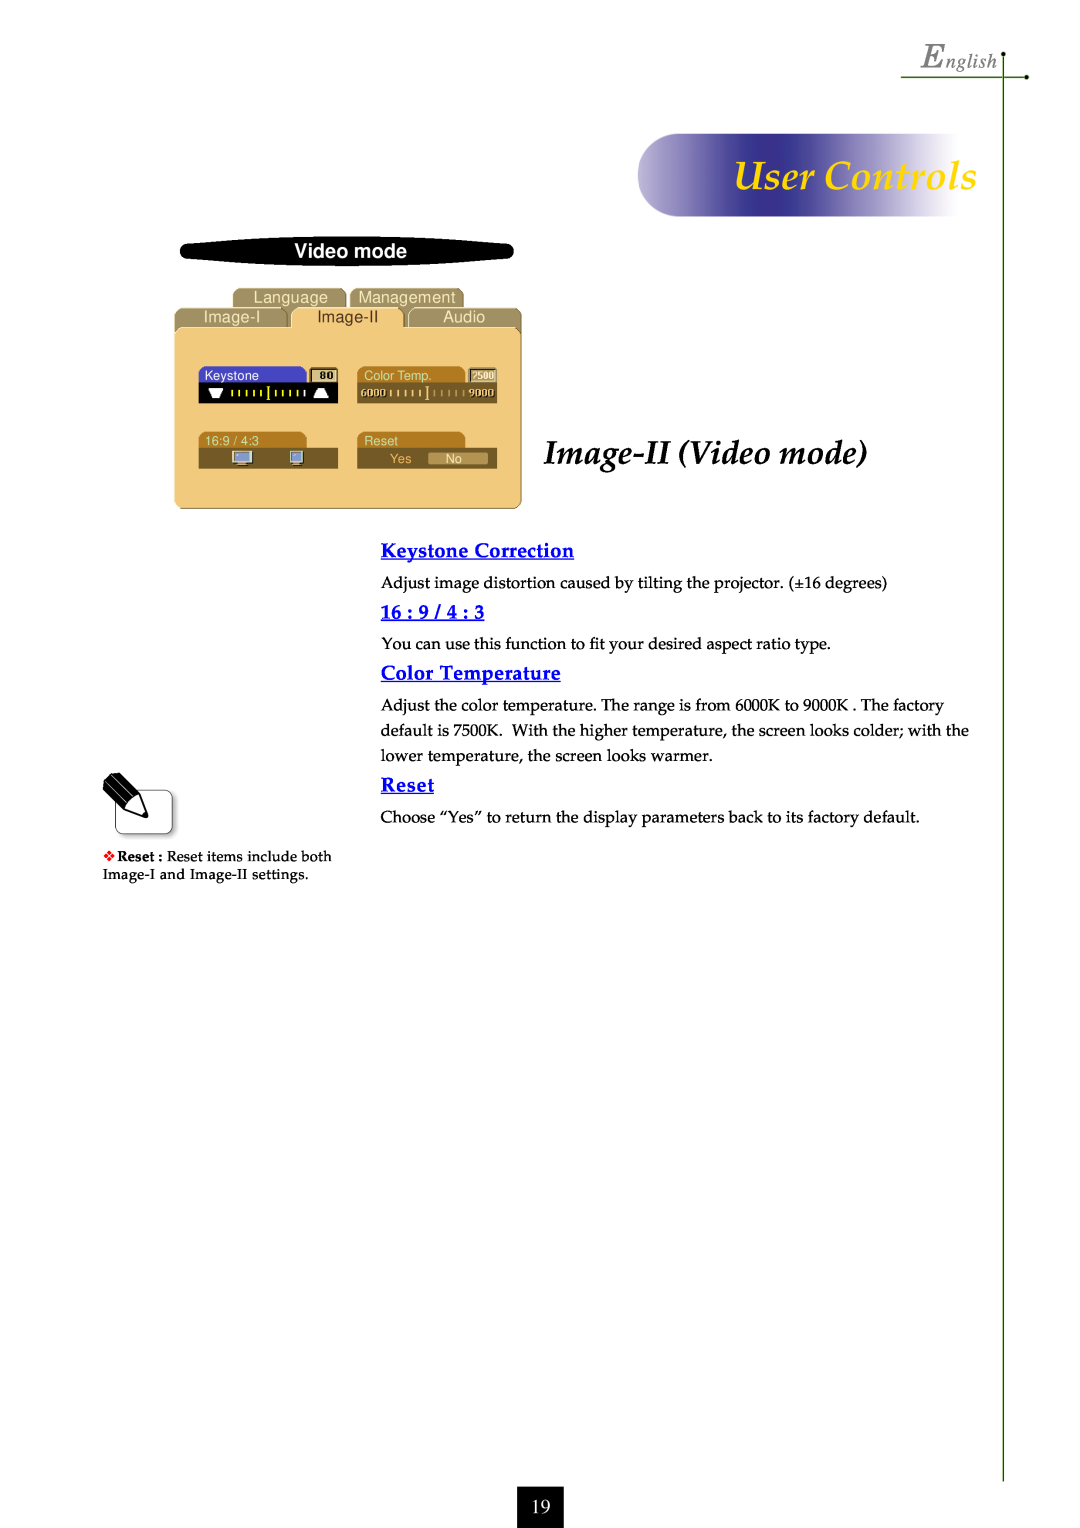 Optoma Technology EP750 Image-II Video mode, Keystone Correction, User Controls, English, 16 9 / 4, Color Temperature 